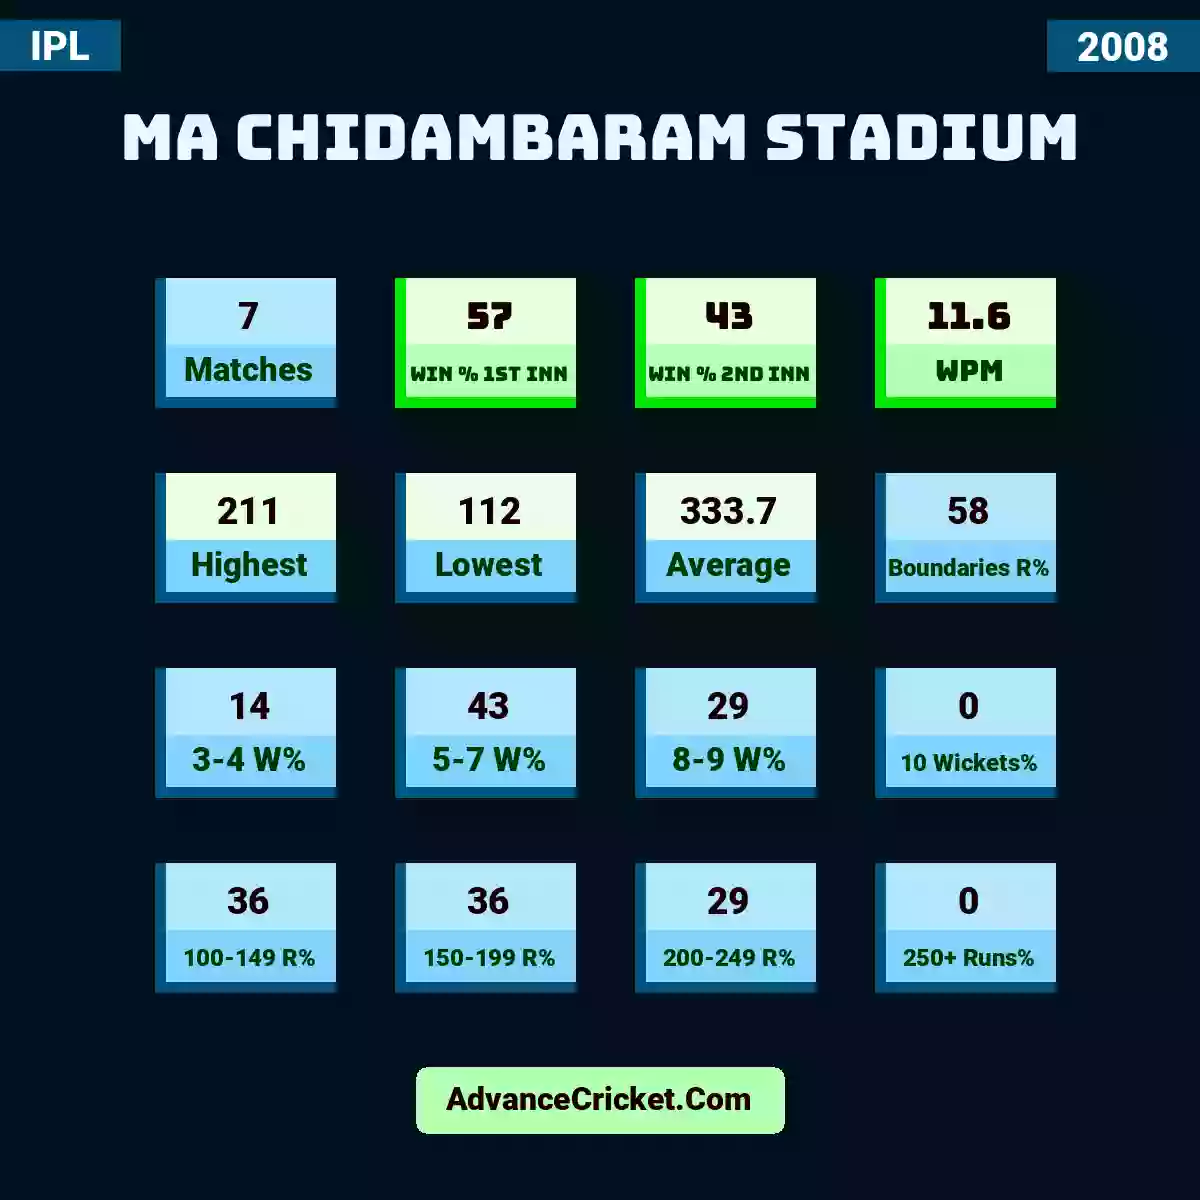 Image showing MA Chidambaram Stadium with Matches: 7, Win % 1st Inn: 57, Win % 2nd Inn: 43, WPM: 11.6, Highest: 211, Lowest: 112, Average: 333.7, Boundaries R%: 58, 3-4 W%: 14, 5-7 W%: 43, 8-9 W%: 29, 10 Wickets%: 0, 100-149 R%: 36, 150-199 R%: 36, 200-249 R%: 29, 250+ Runs%: 0.